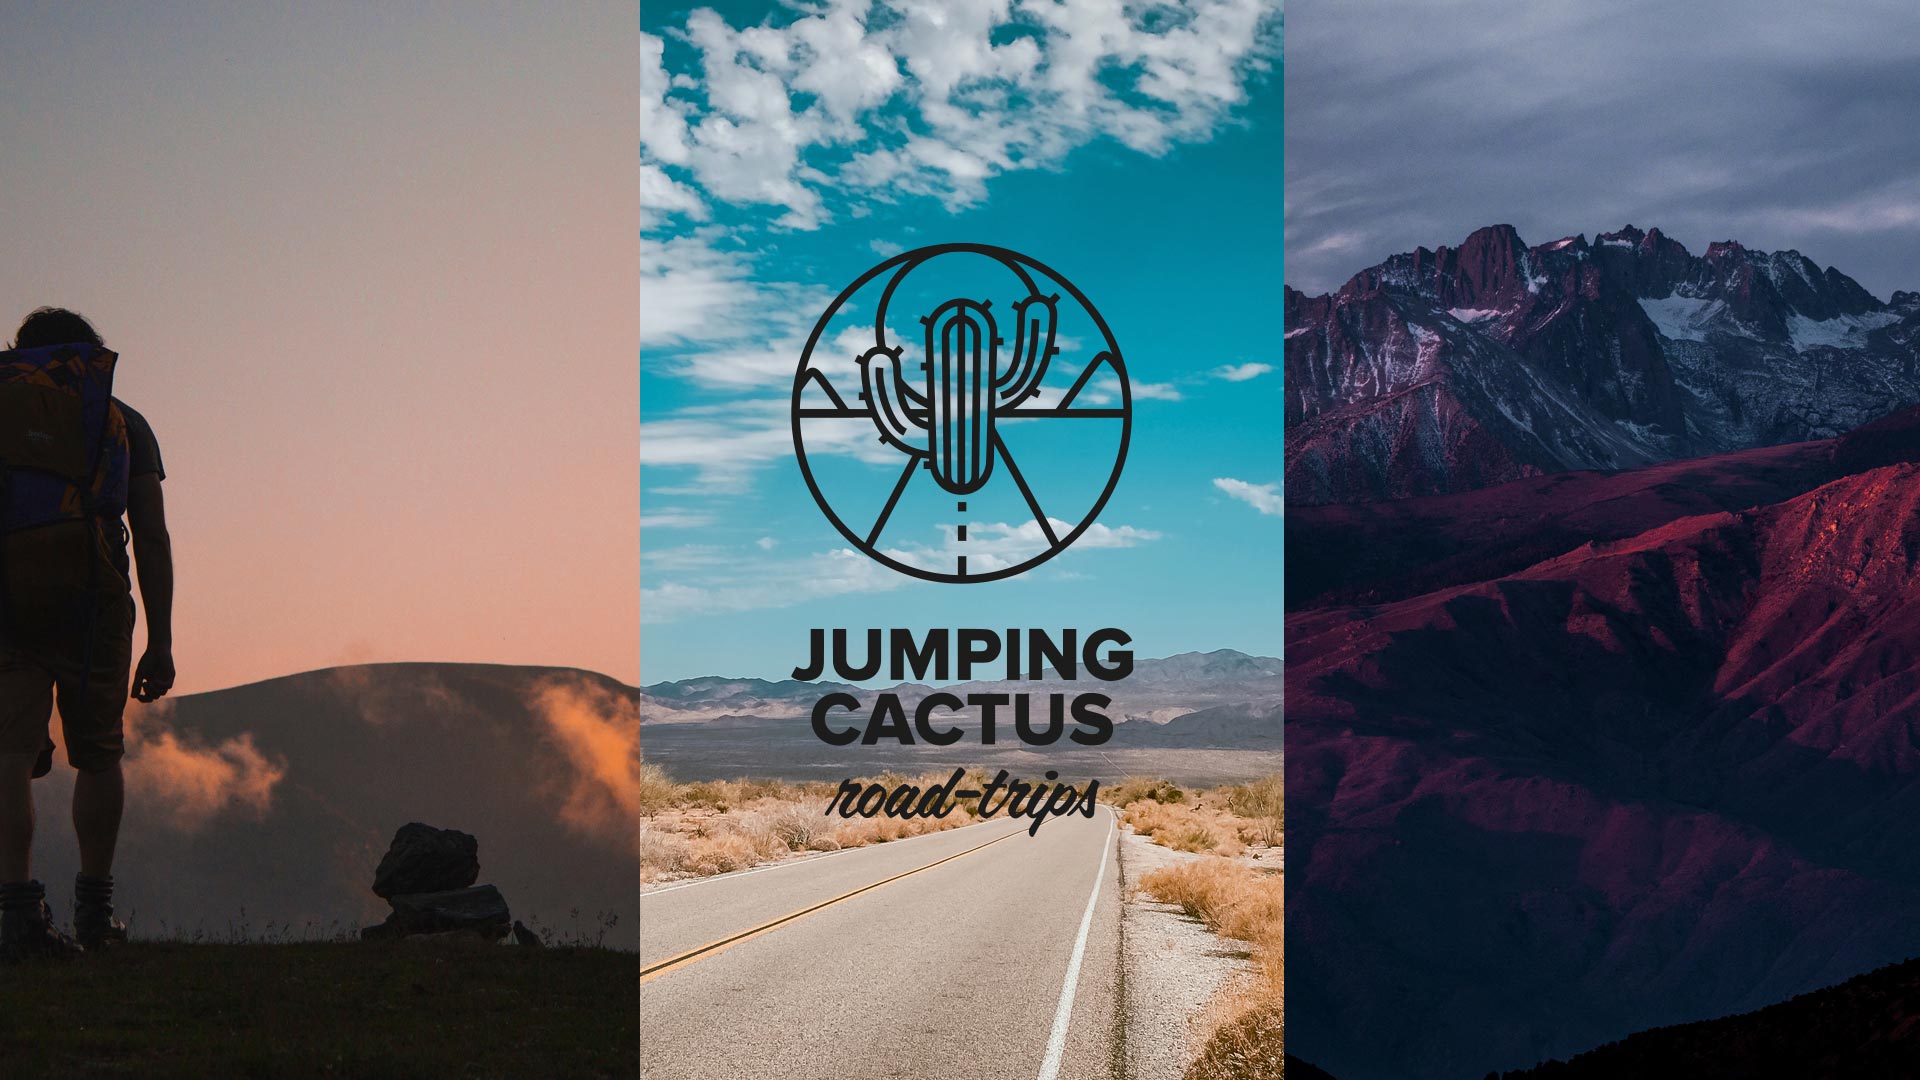 Jade studio grafico trieste JumpingCactus RoadTrip logo brand travel viaggi advertising 04